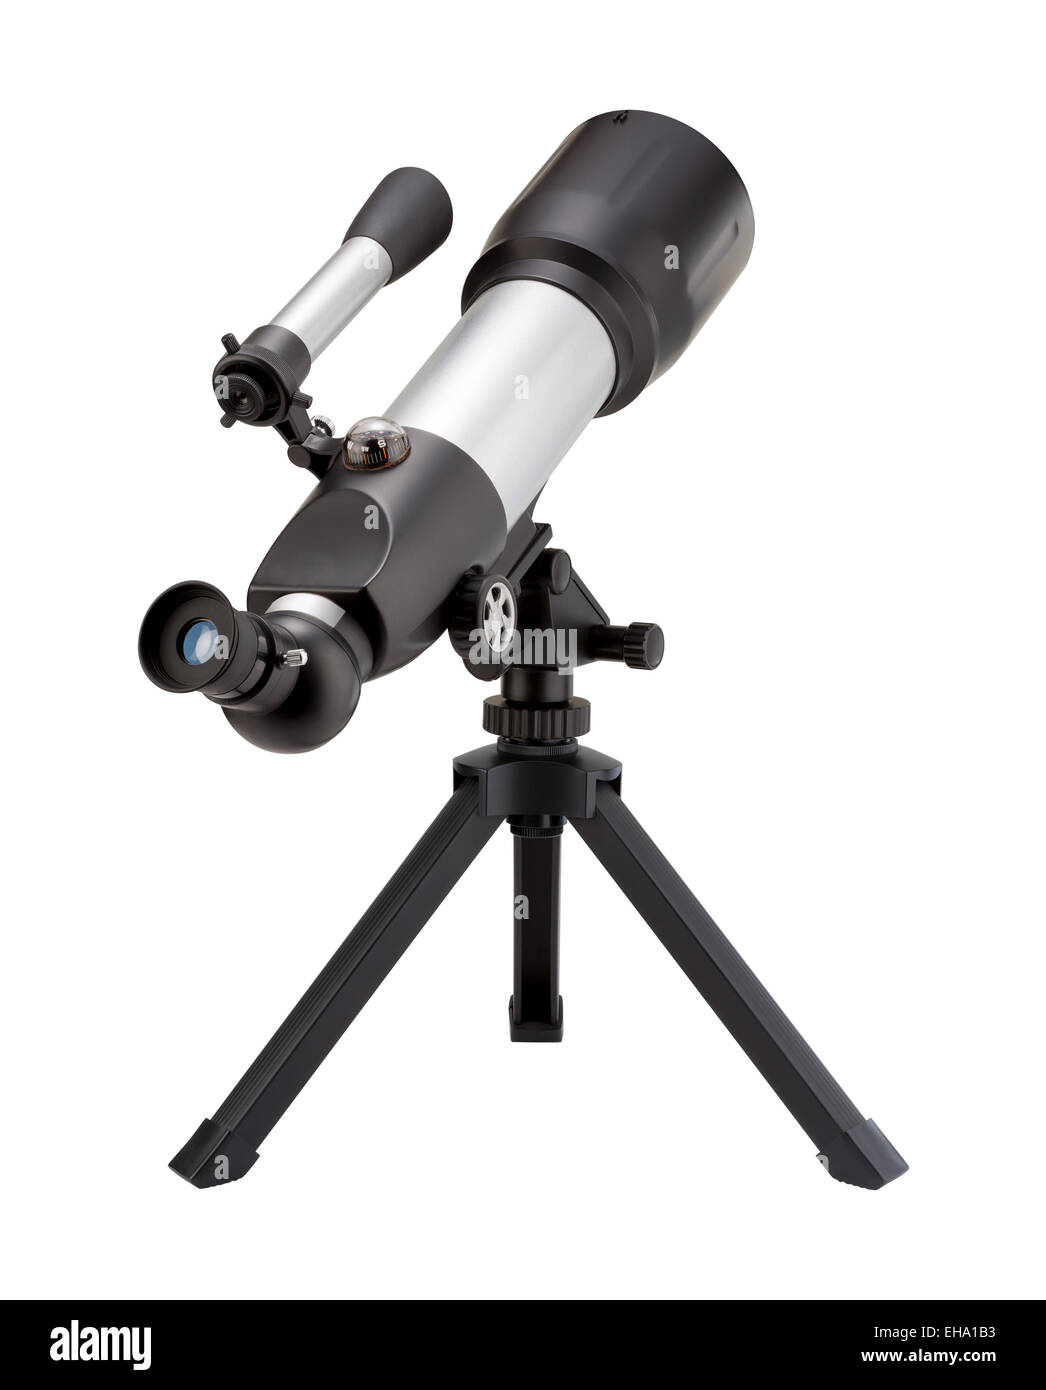 Telescope and Tripod isolated on white. Stock Photo